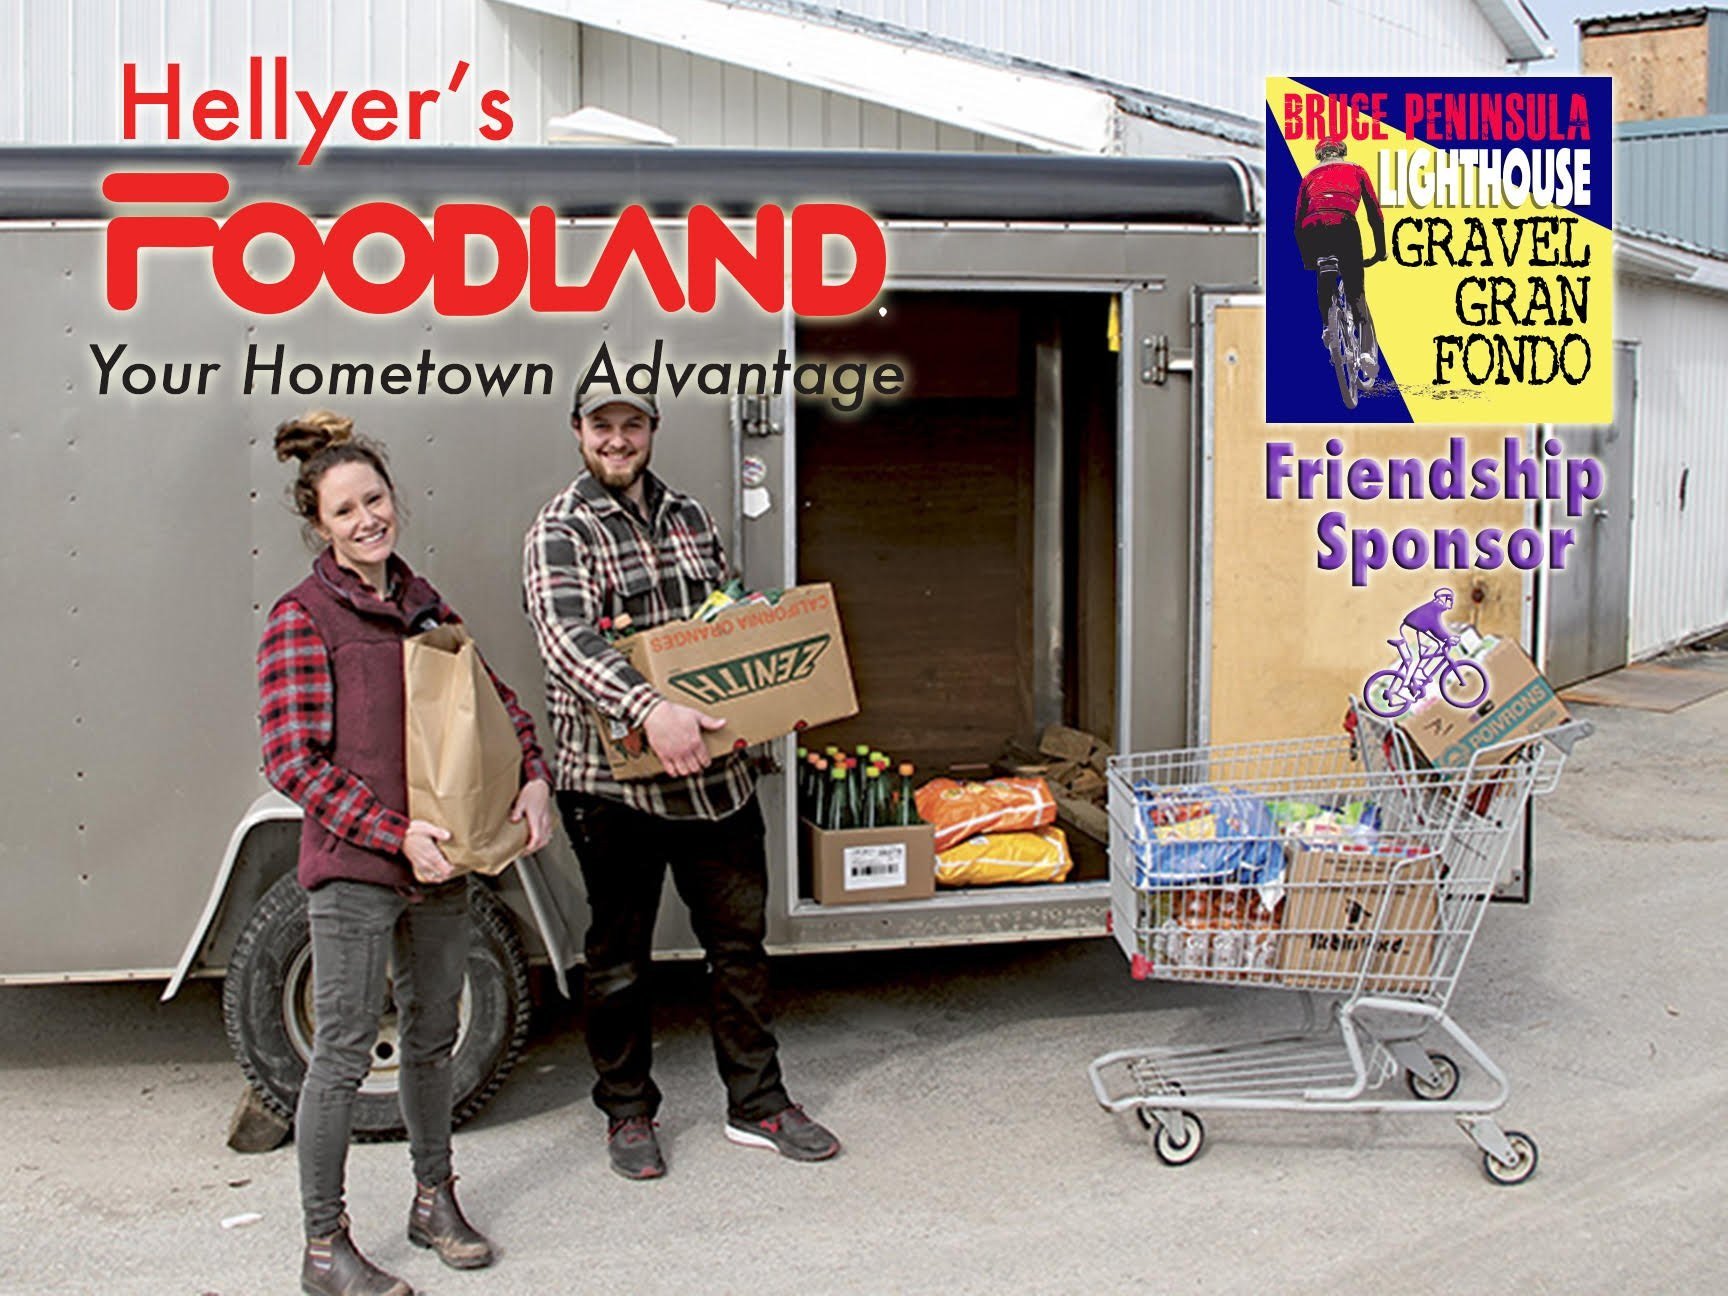 Hellyer's Foodland